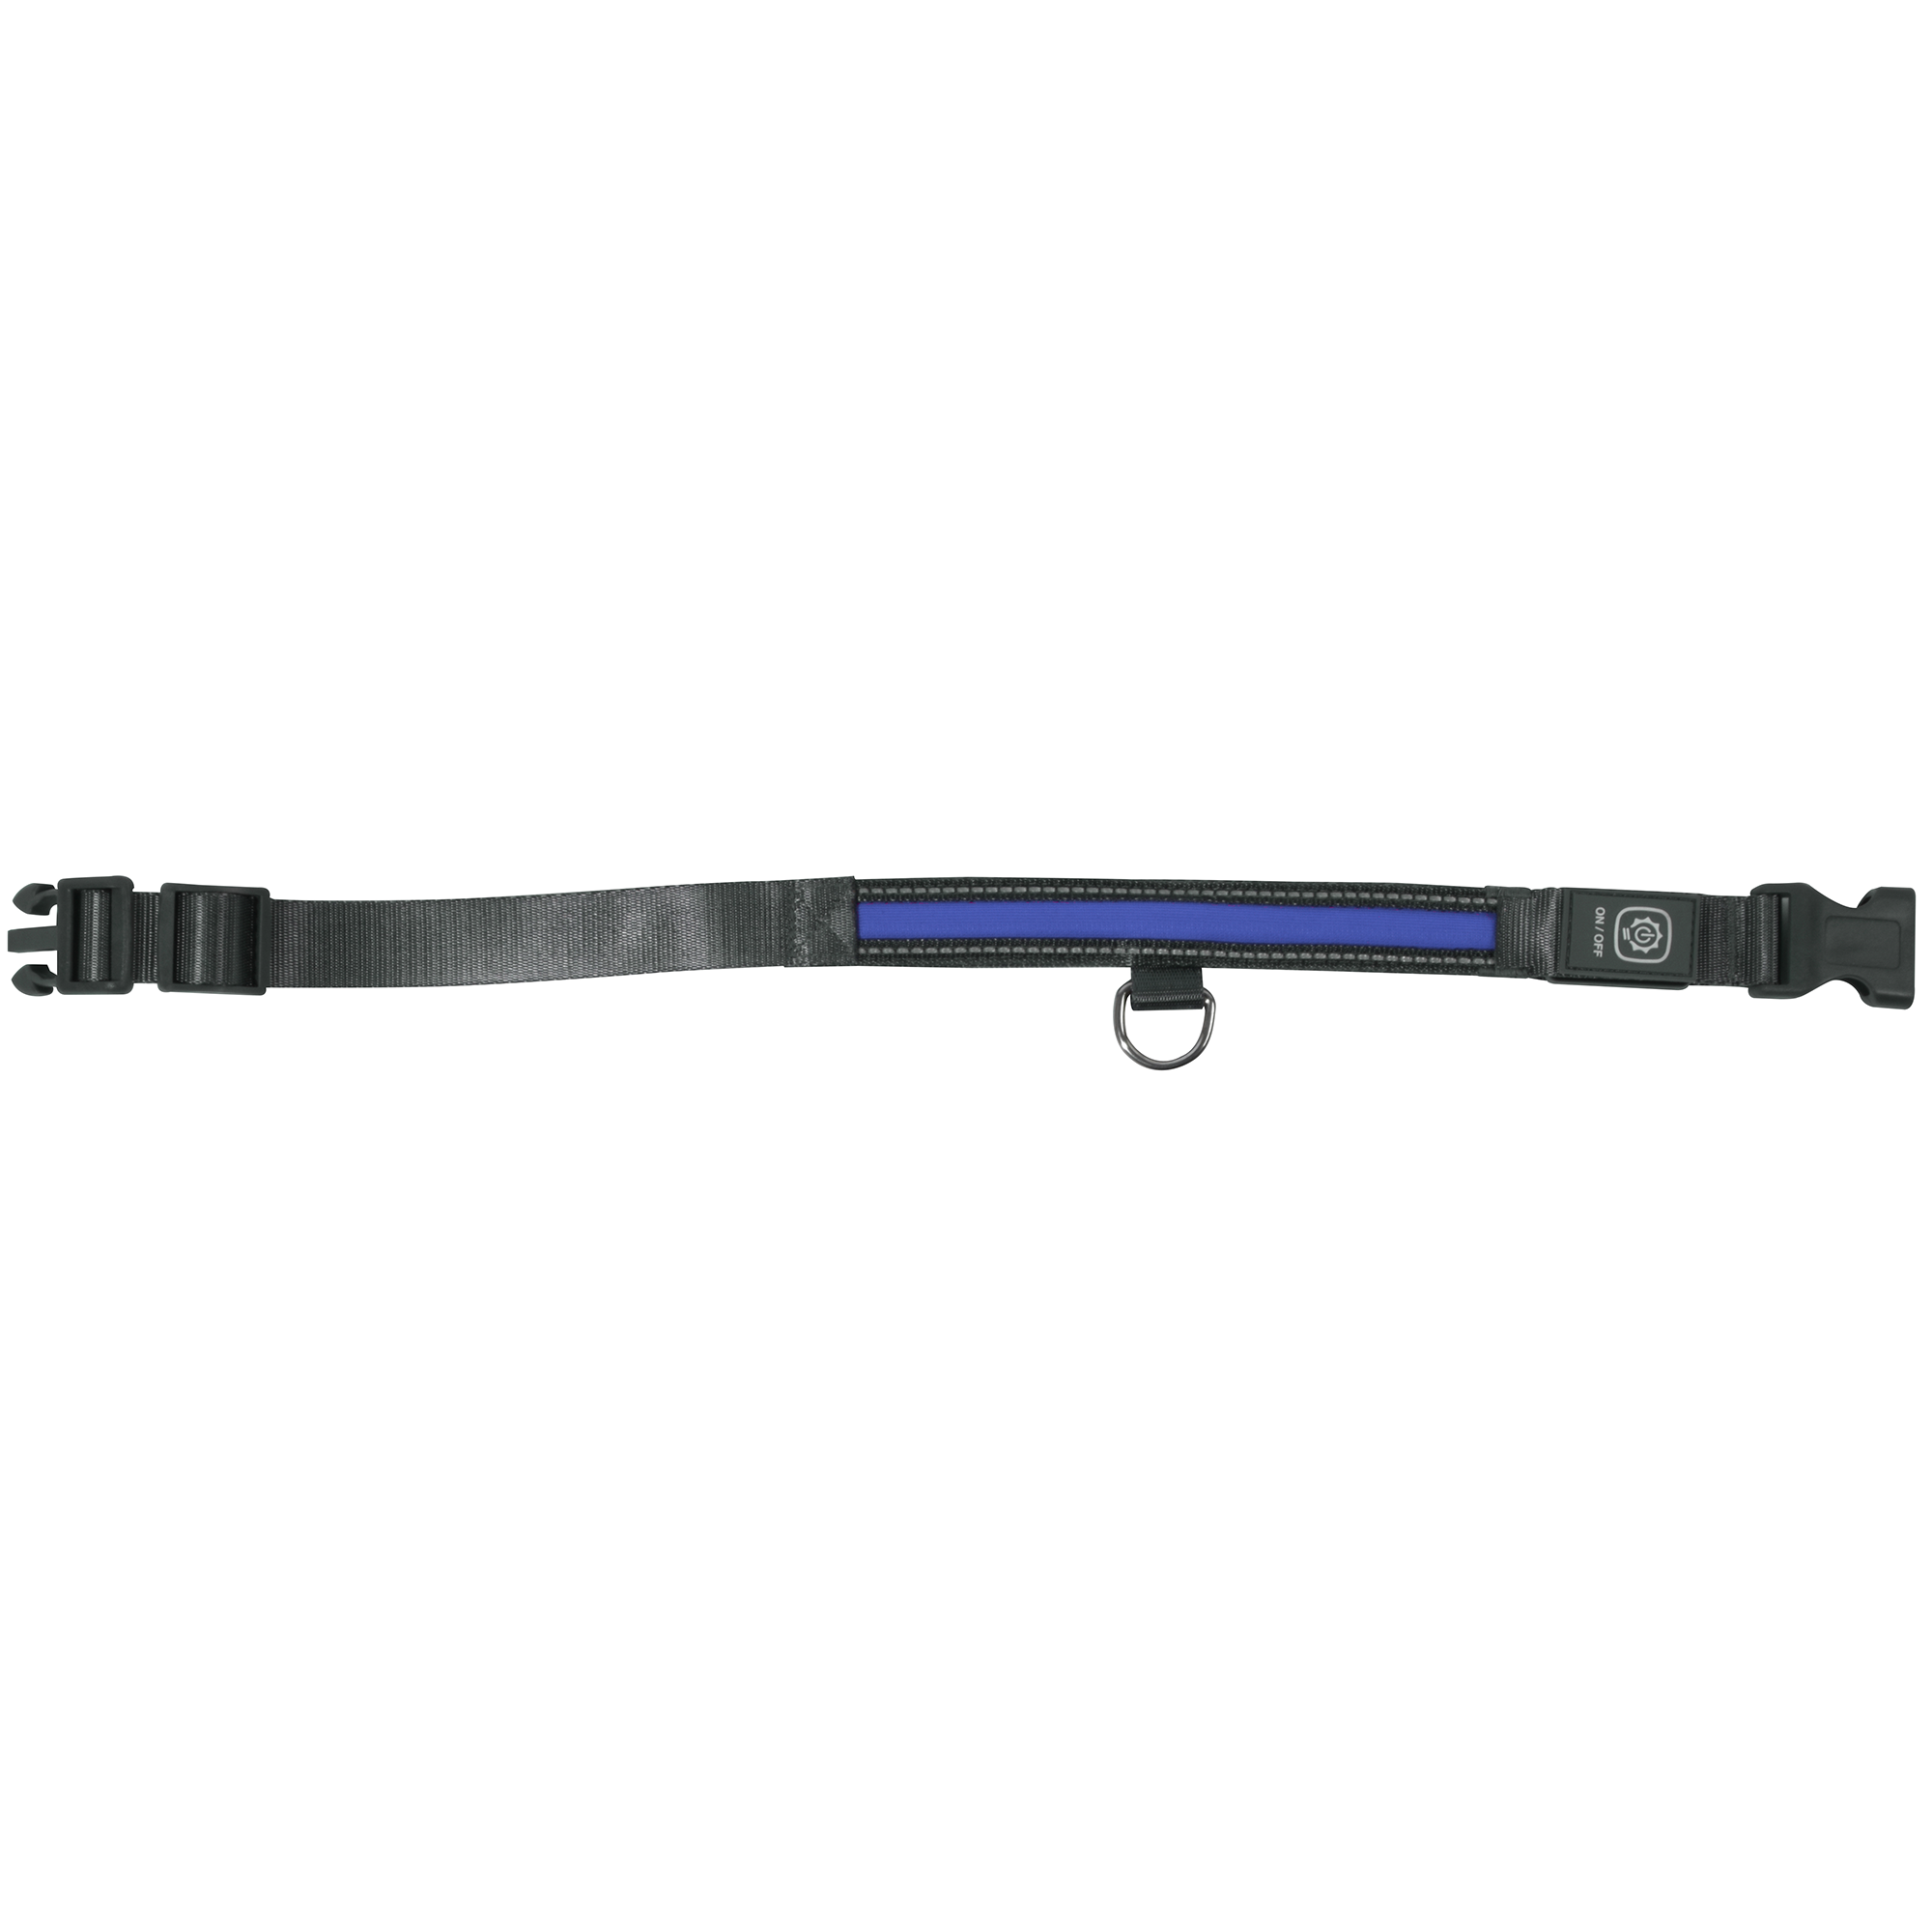 LED-Hundehalsband reflektierend blau 56 cm + product picture